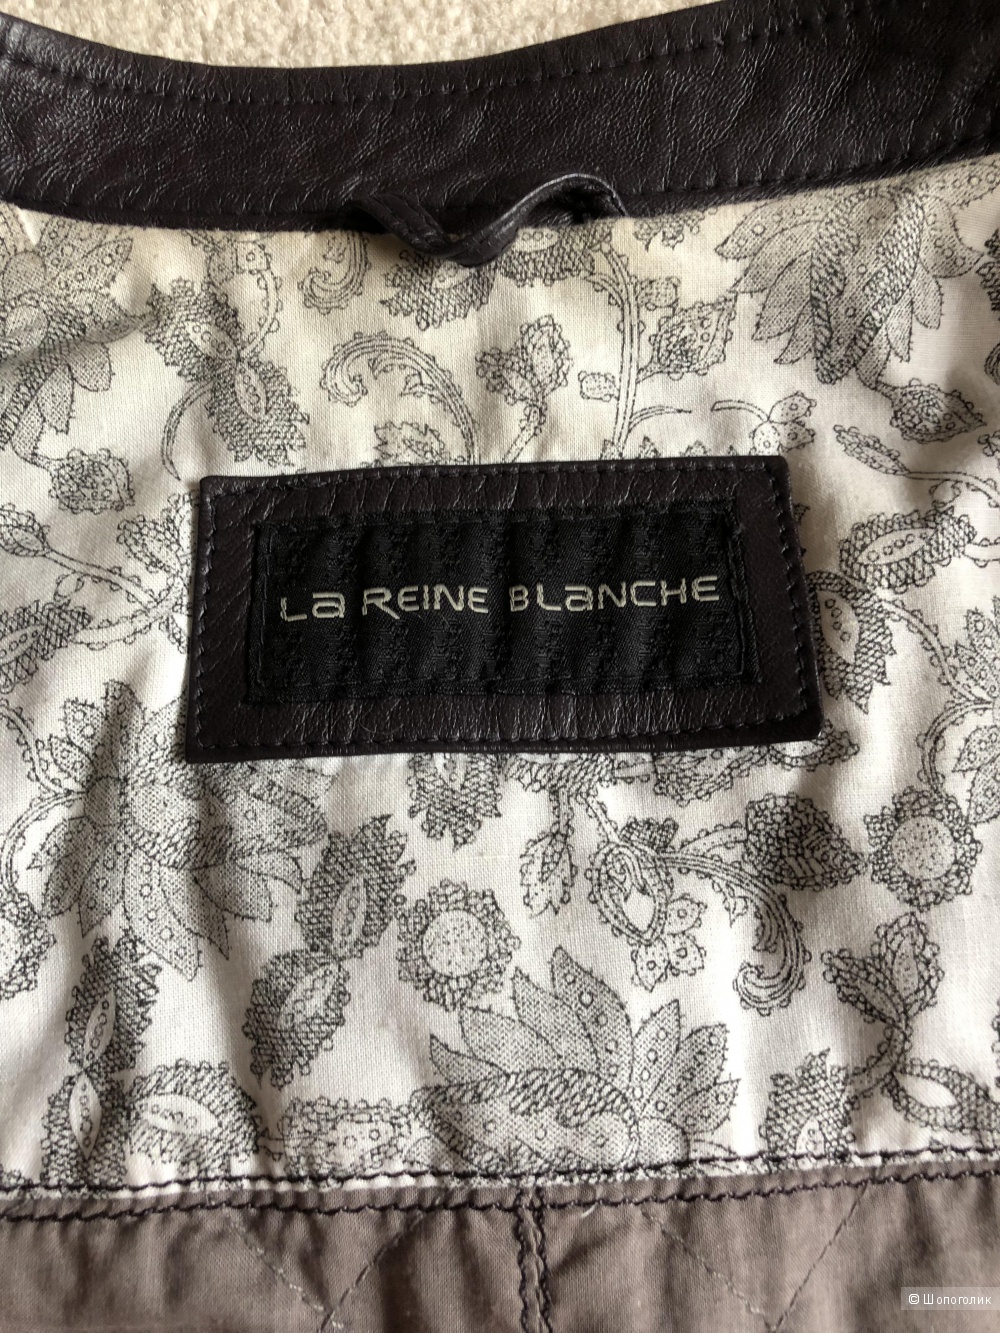 Кожаная куртка La reine blanche 42 размер